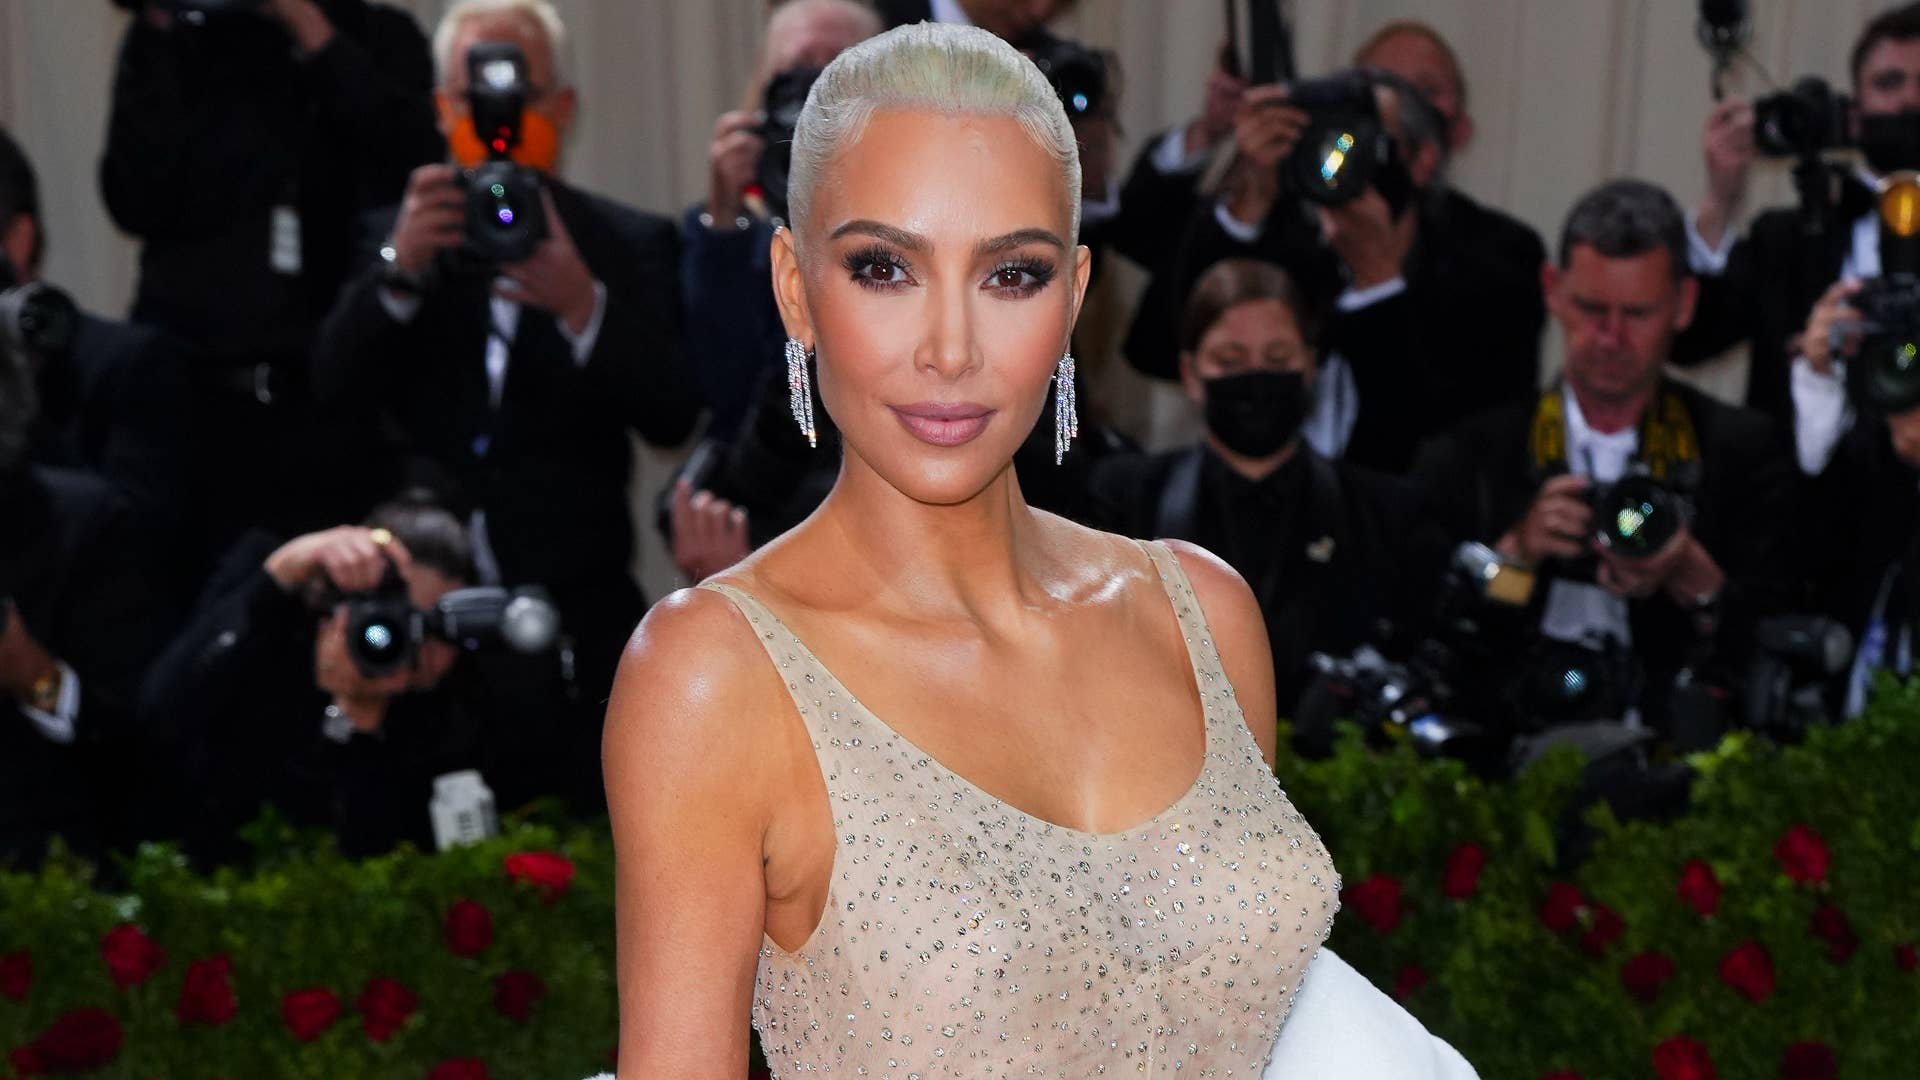 Marilyn Monroe's Dress Worn to the Met Gala by Kim Kardashian Appears to Be  Damaged